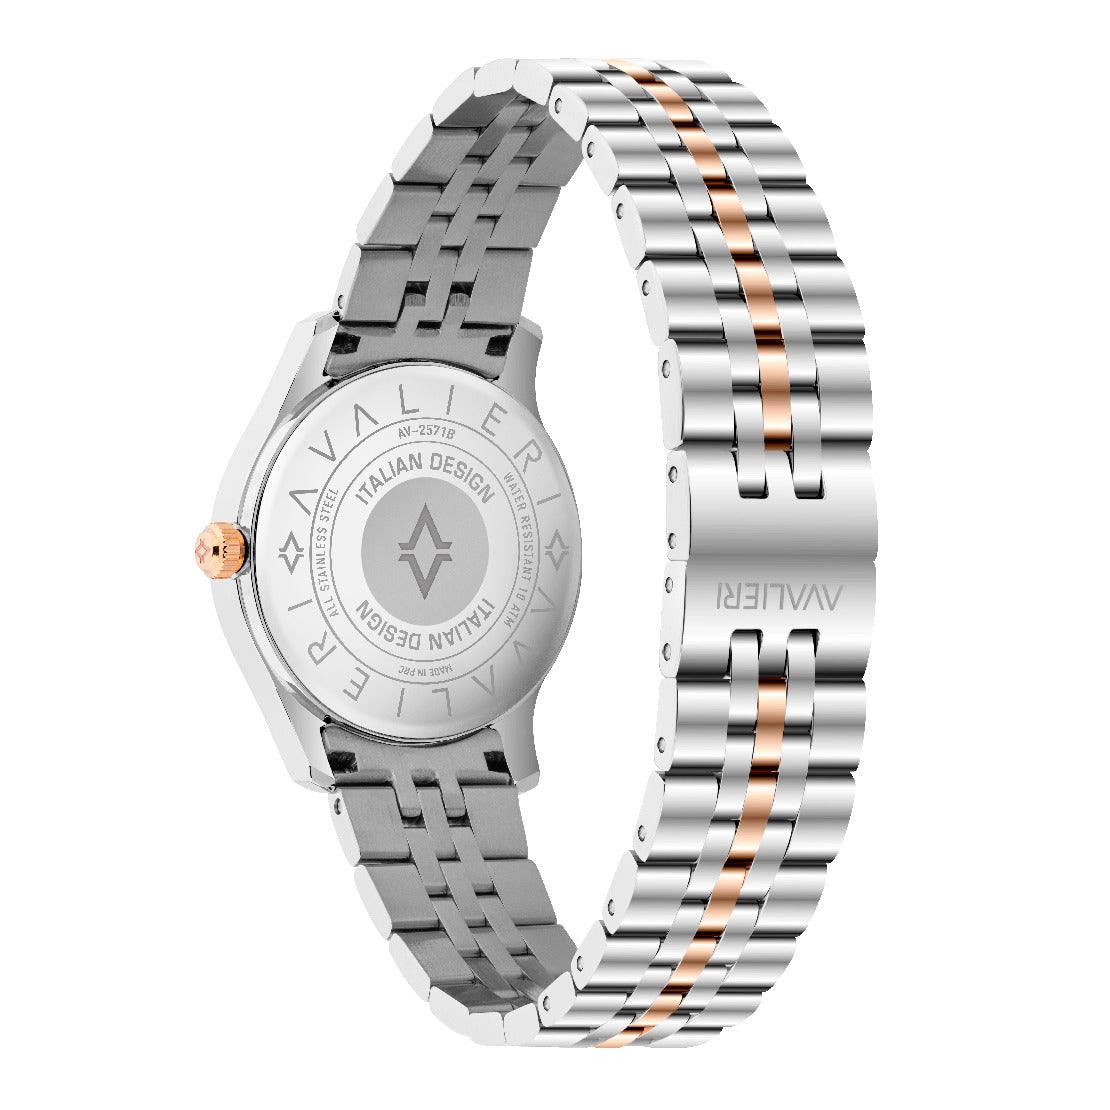 Avalieri Women's Quartz Watch Silver Dial - AV-2571B